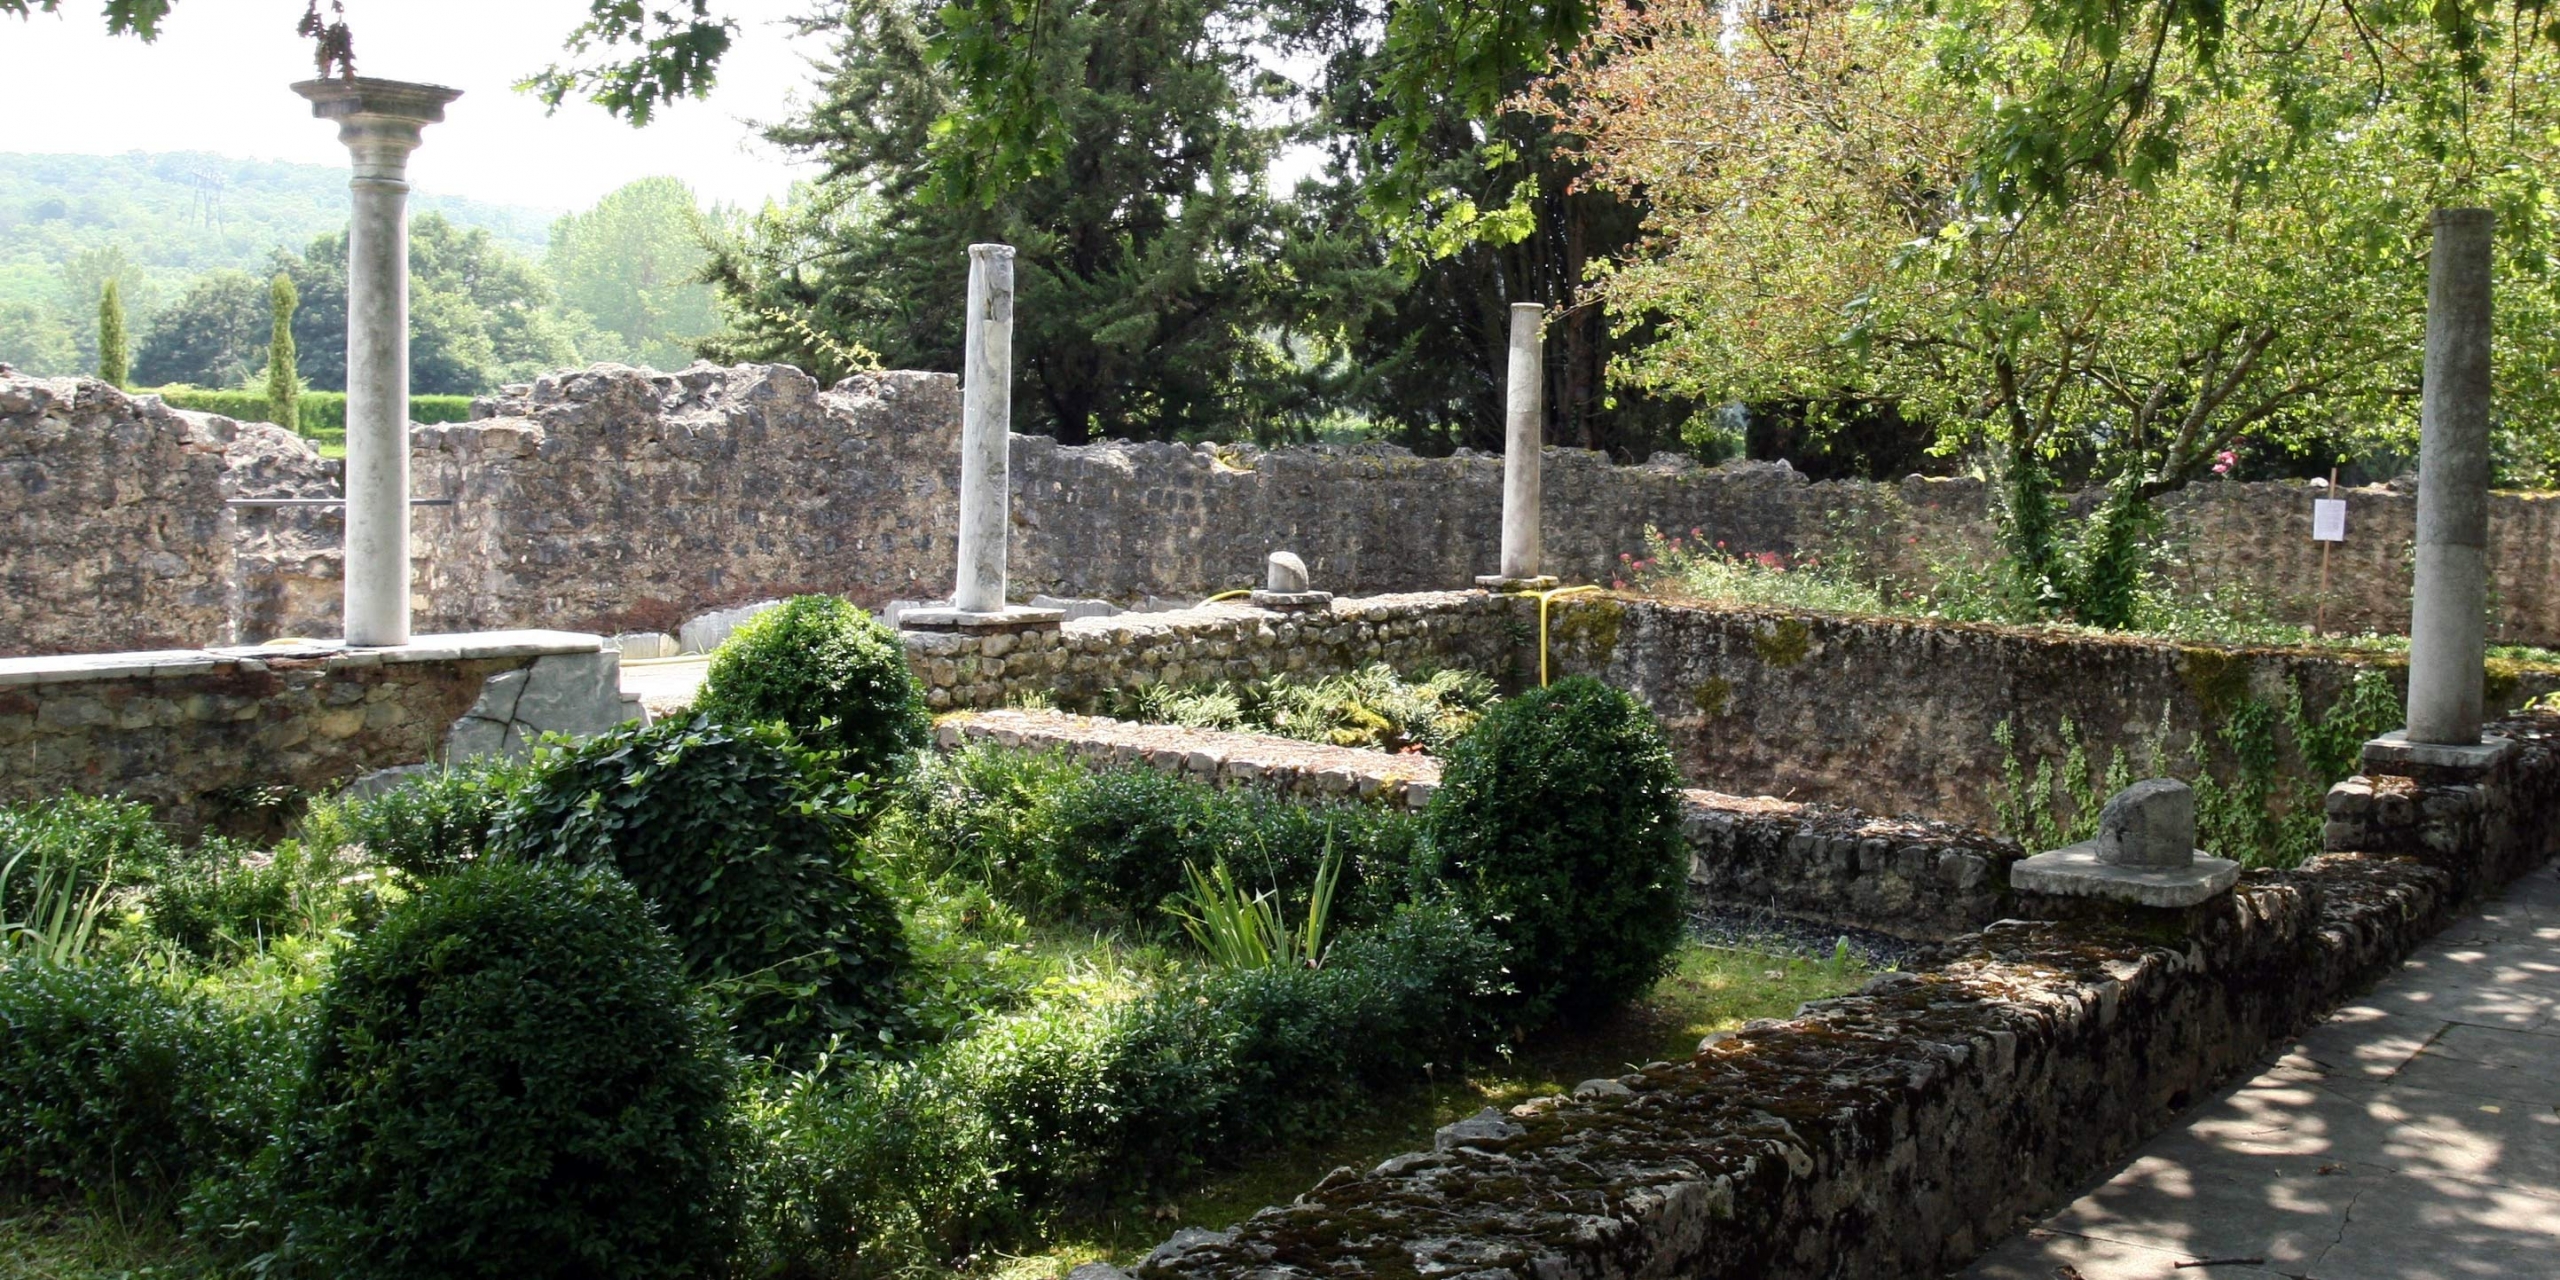 Gallo-Romeinse villa rustica in Montmaurin in Zuid-Frankrijk